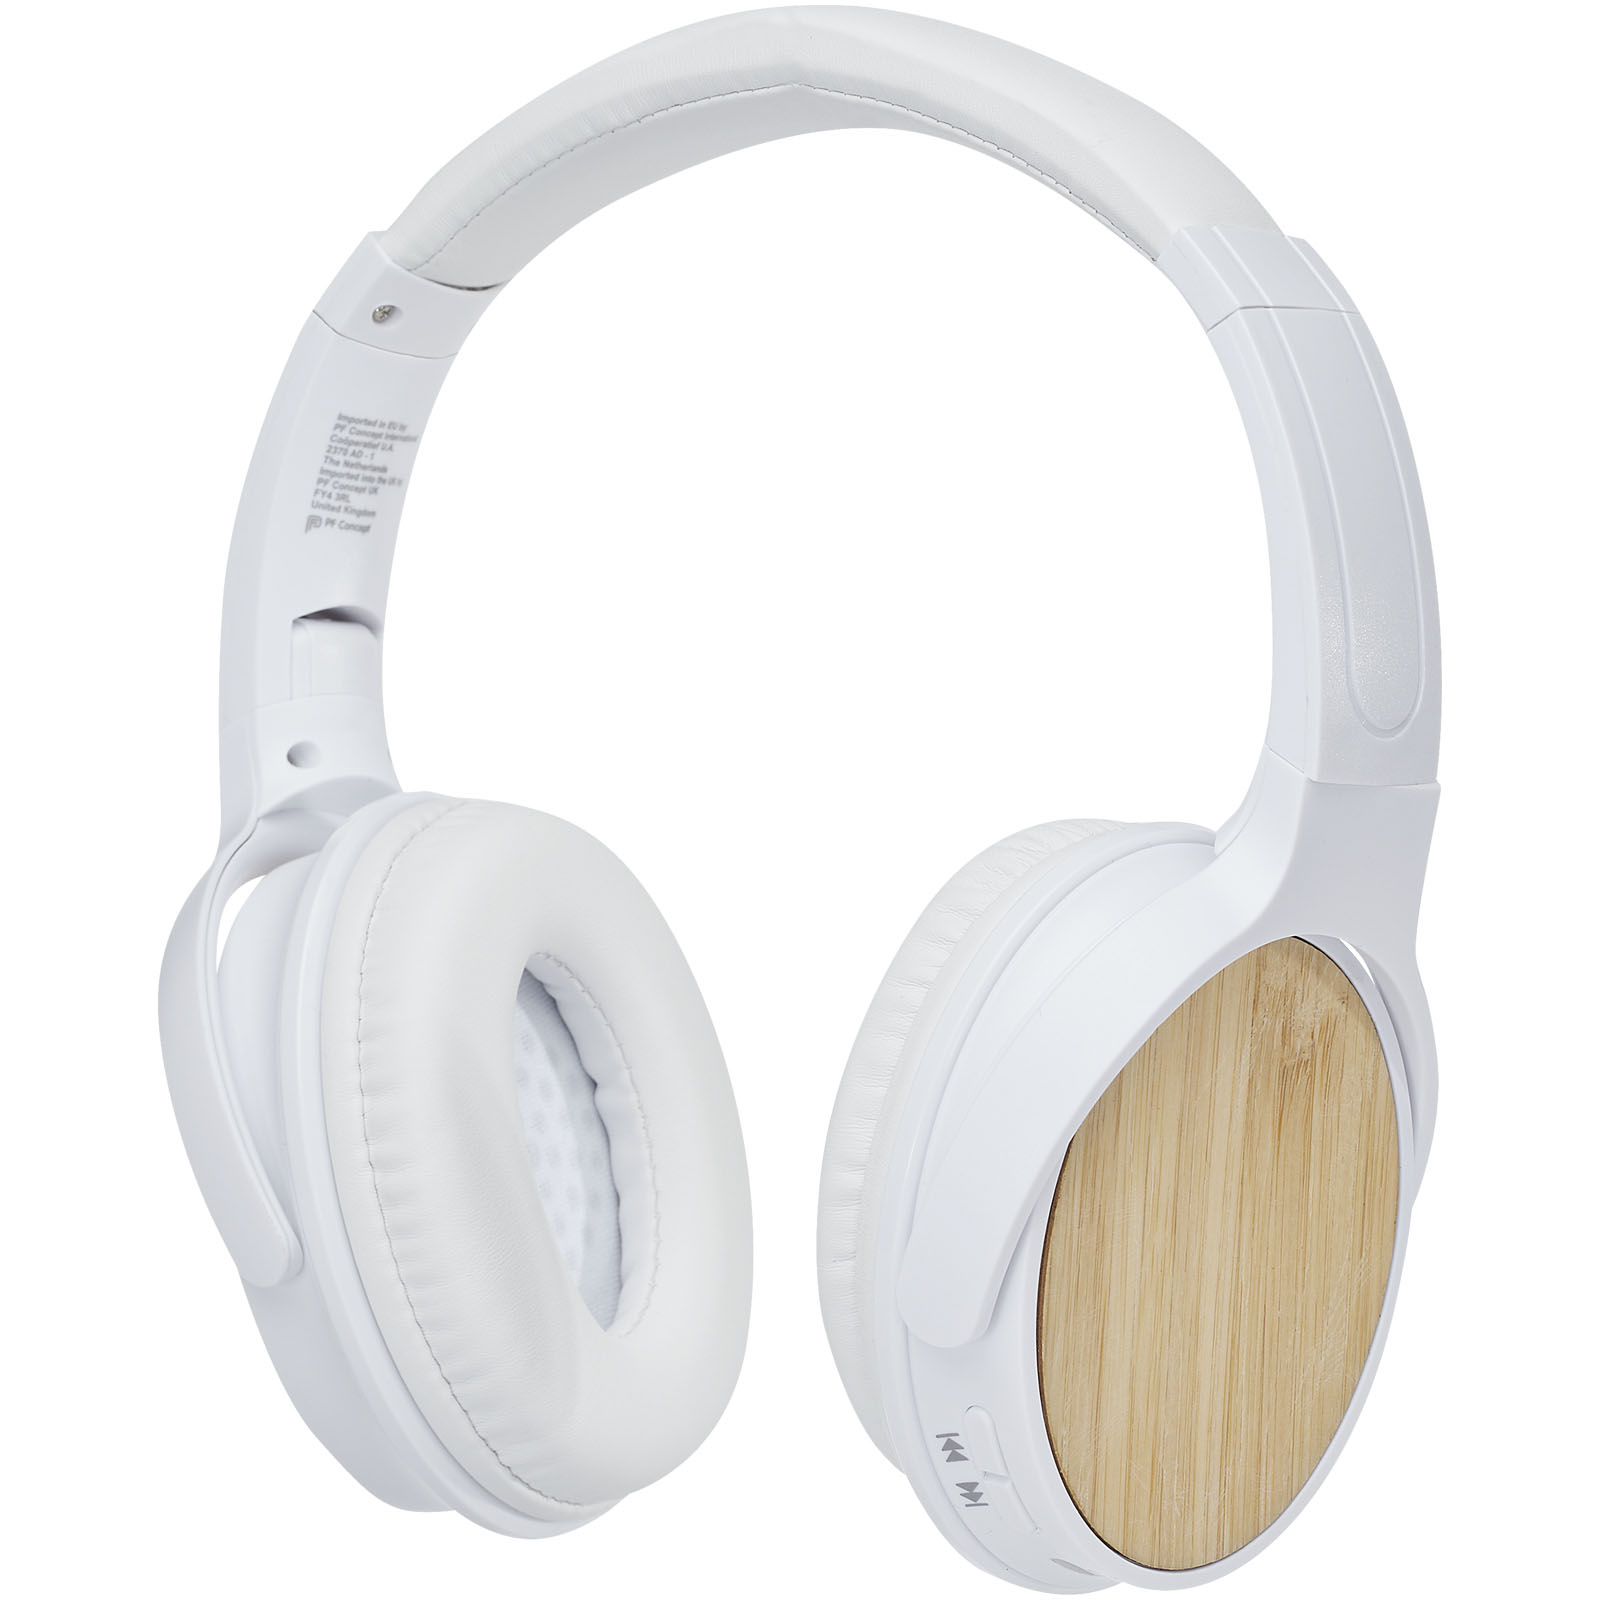 Headphones - Athos bamboo Bluetooth® headphones with microphone